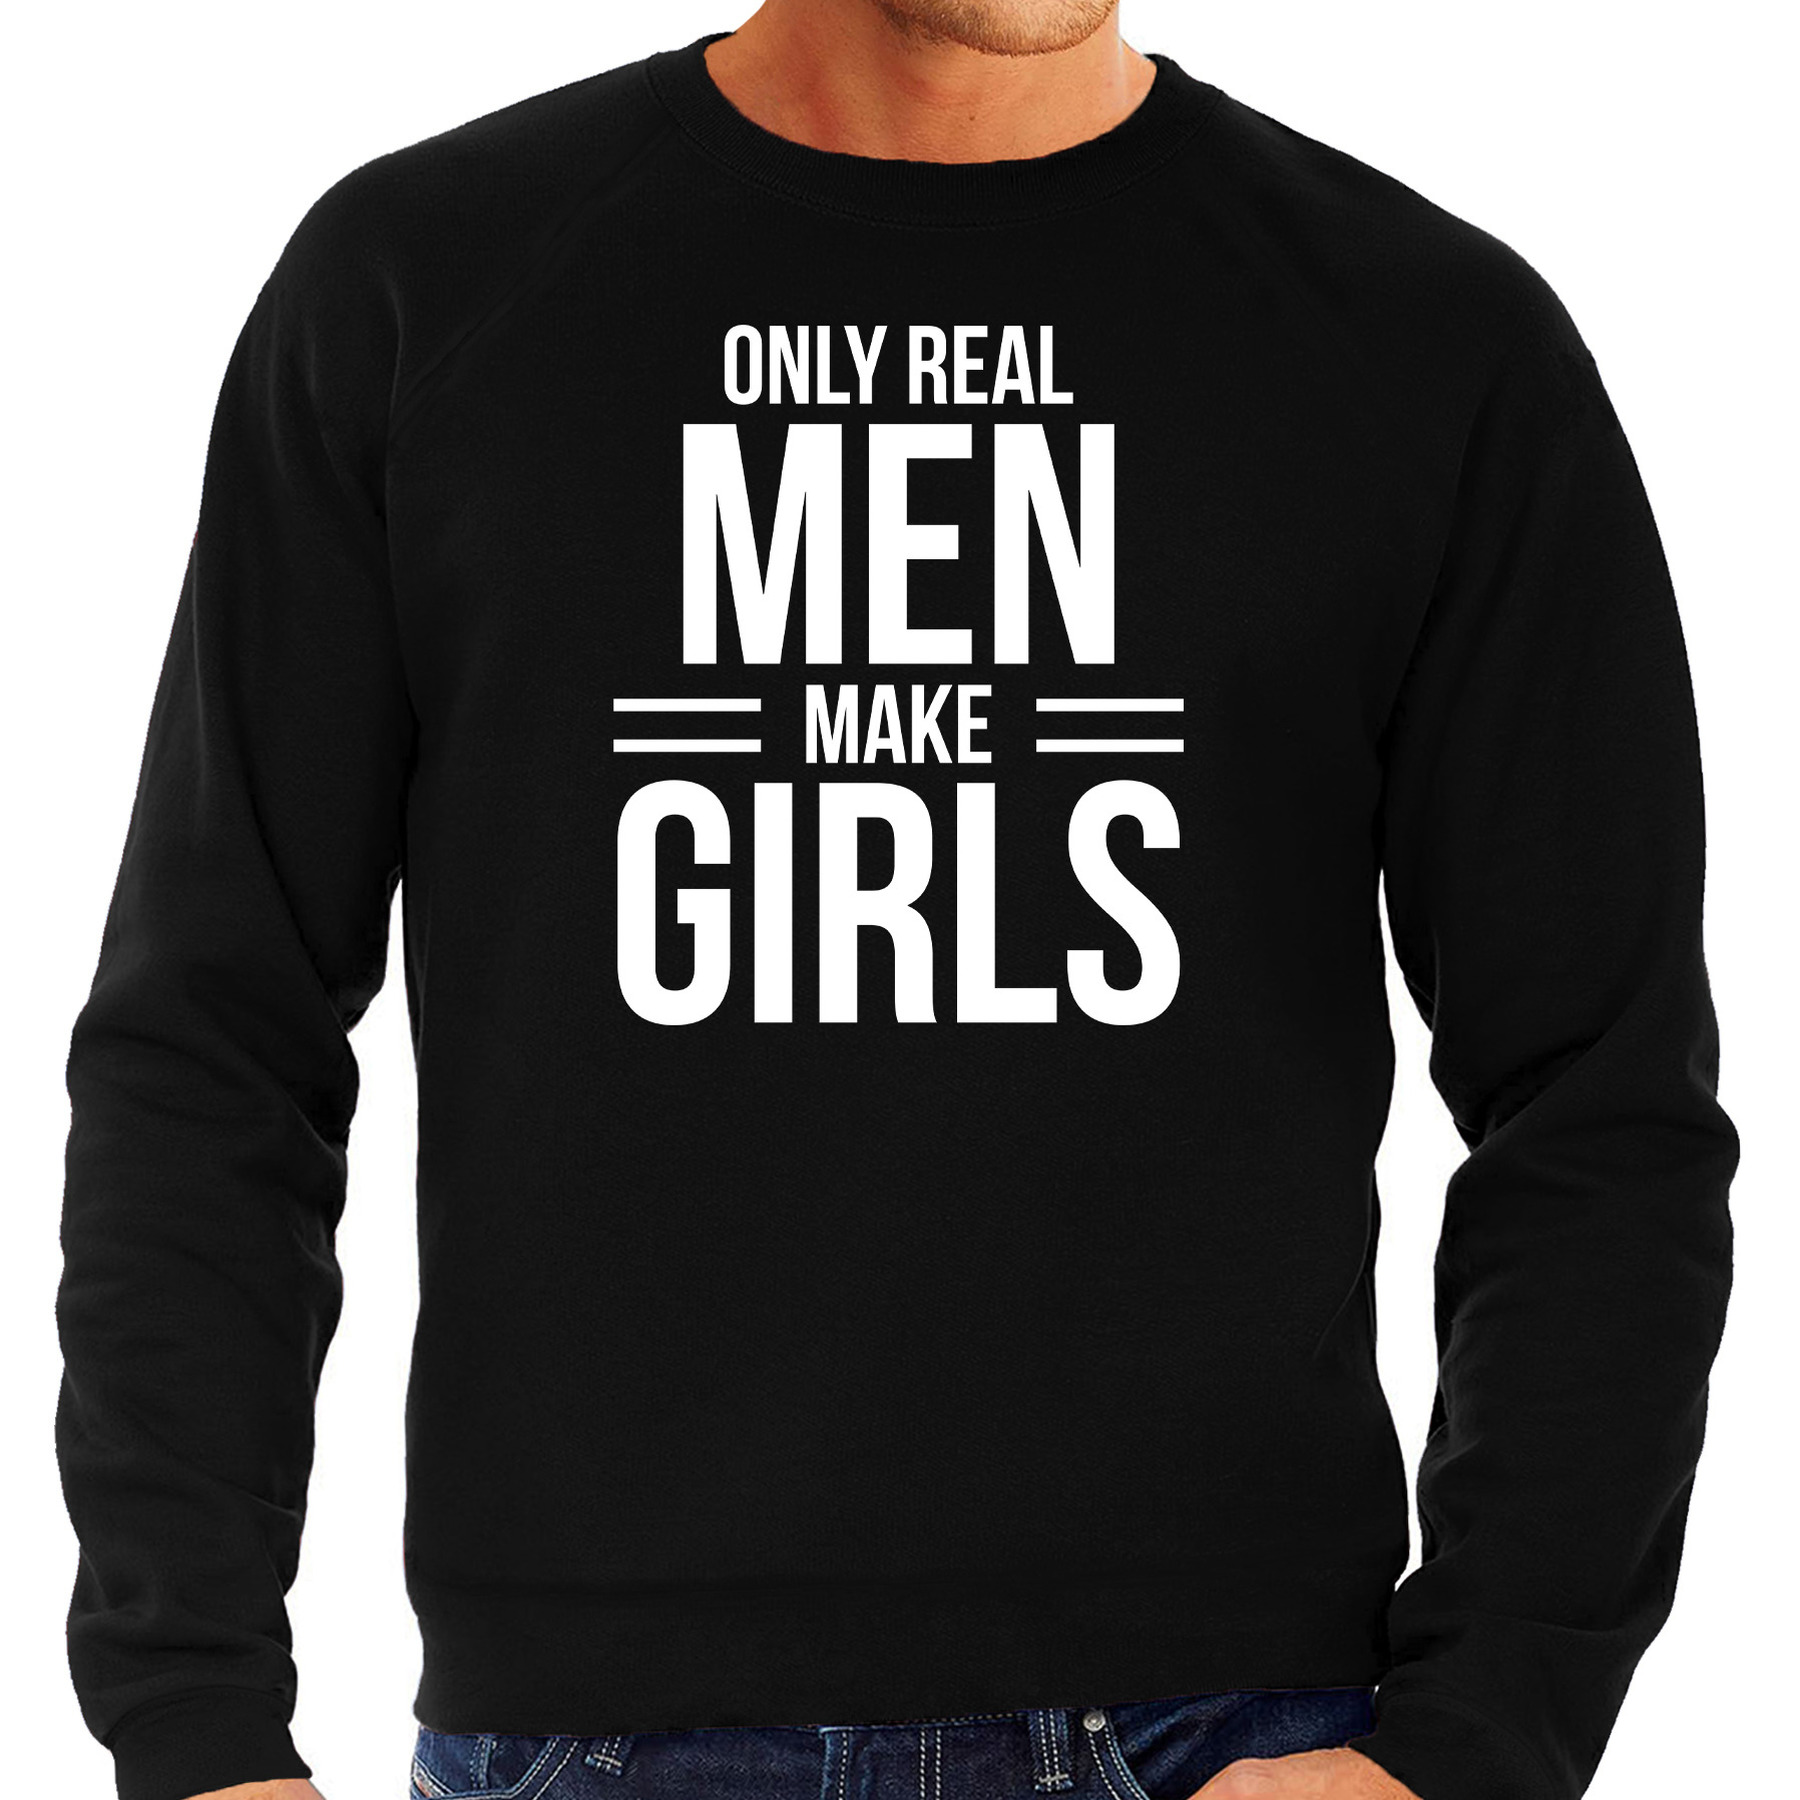 Only real men make girls sweater / trui zwart voor heren - vaderdag cadeau truien papa